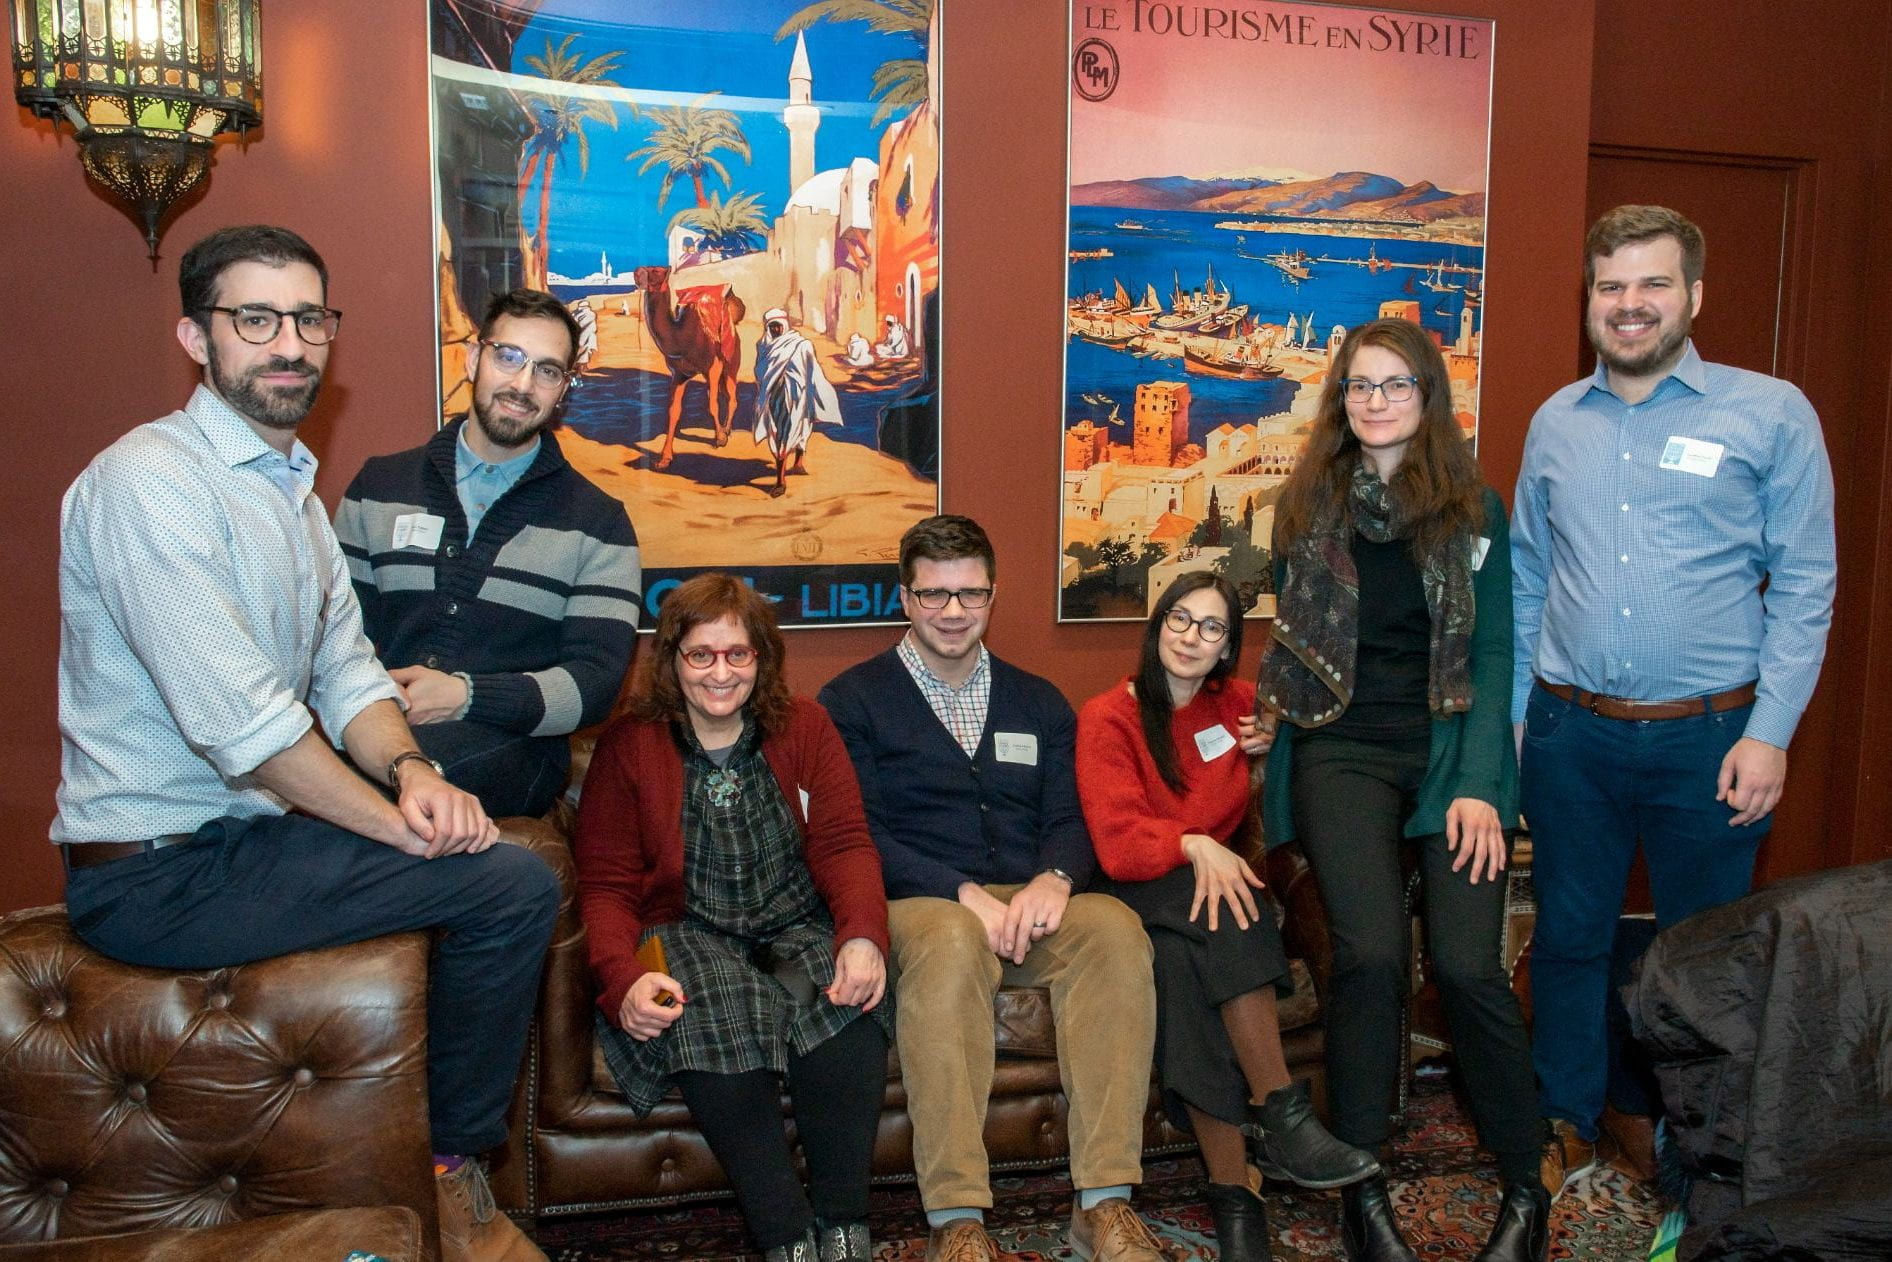 2019-2020 Starr Fellows in Center for Jewish Studies at Harvard Scholars reception at the Harvard Semetic Museum, Cambridge, MA
Starr Fellows